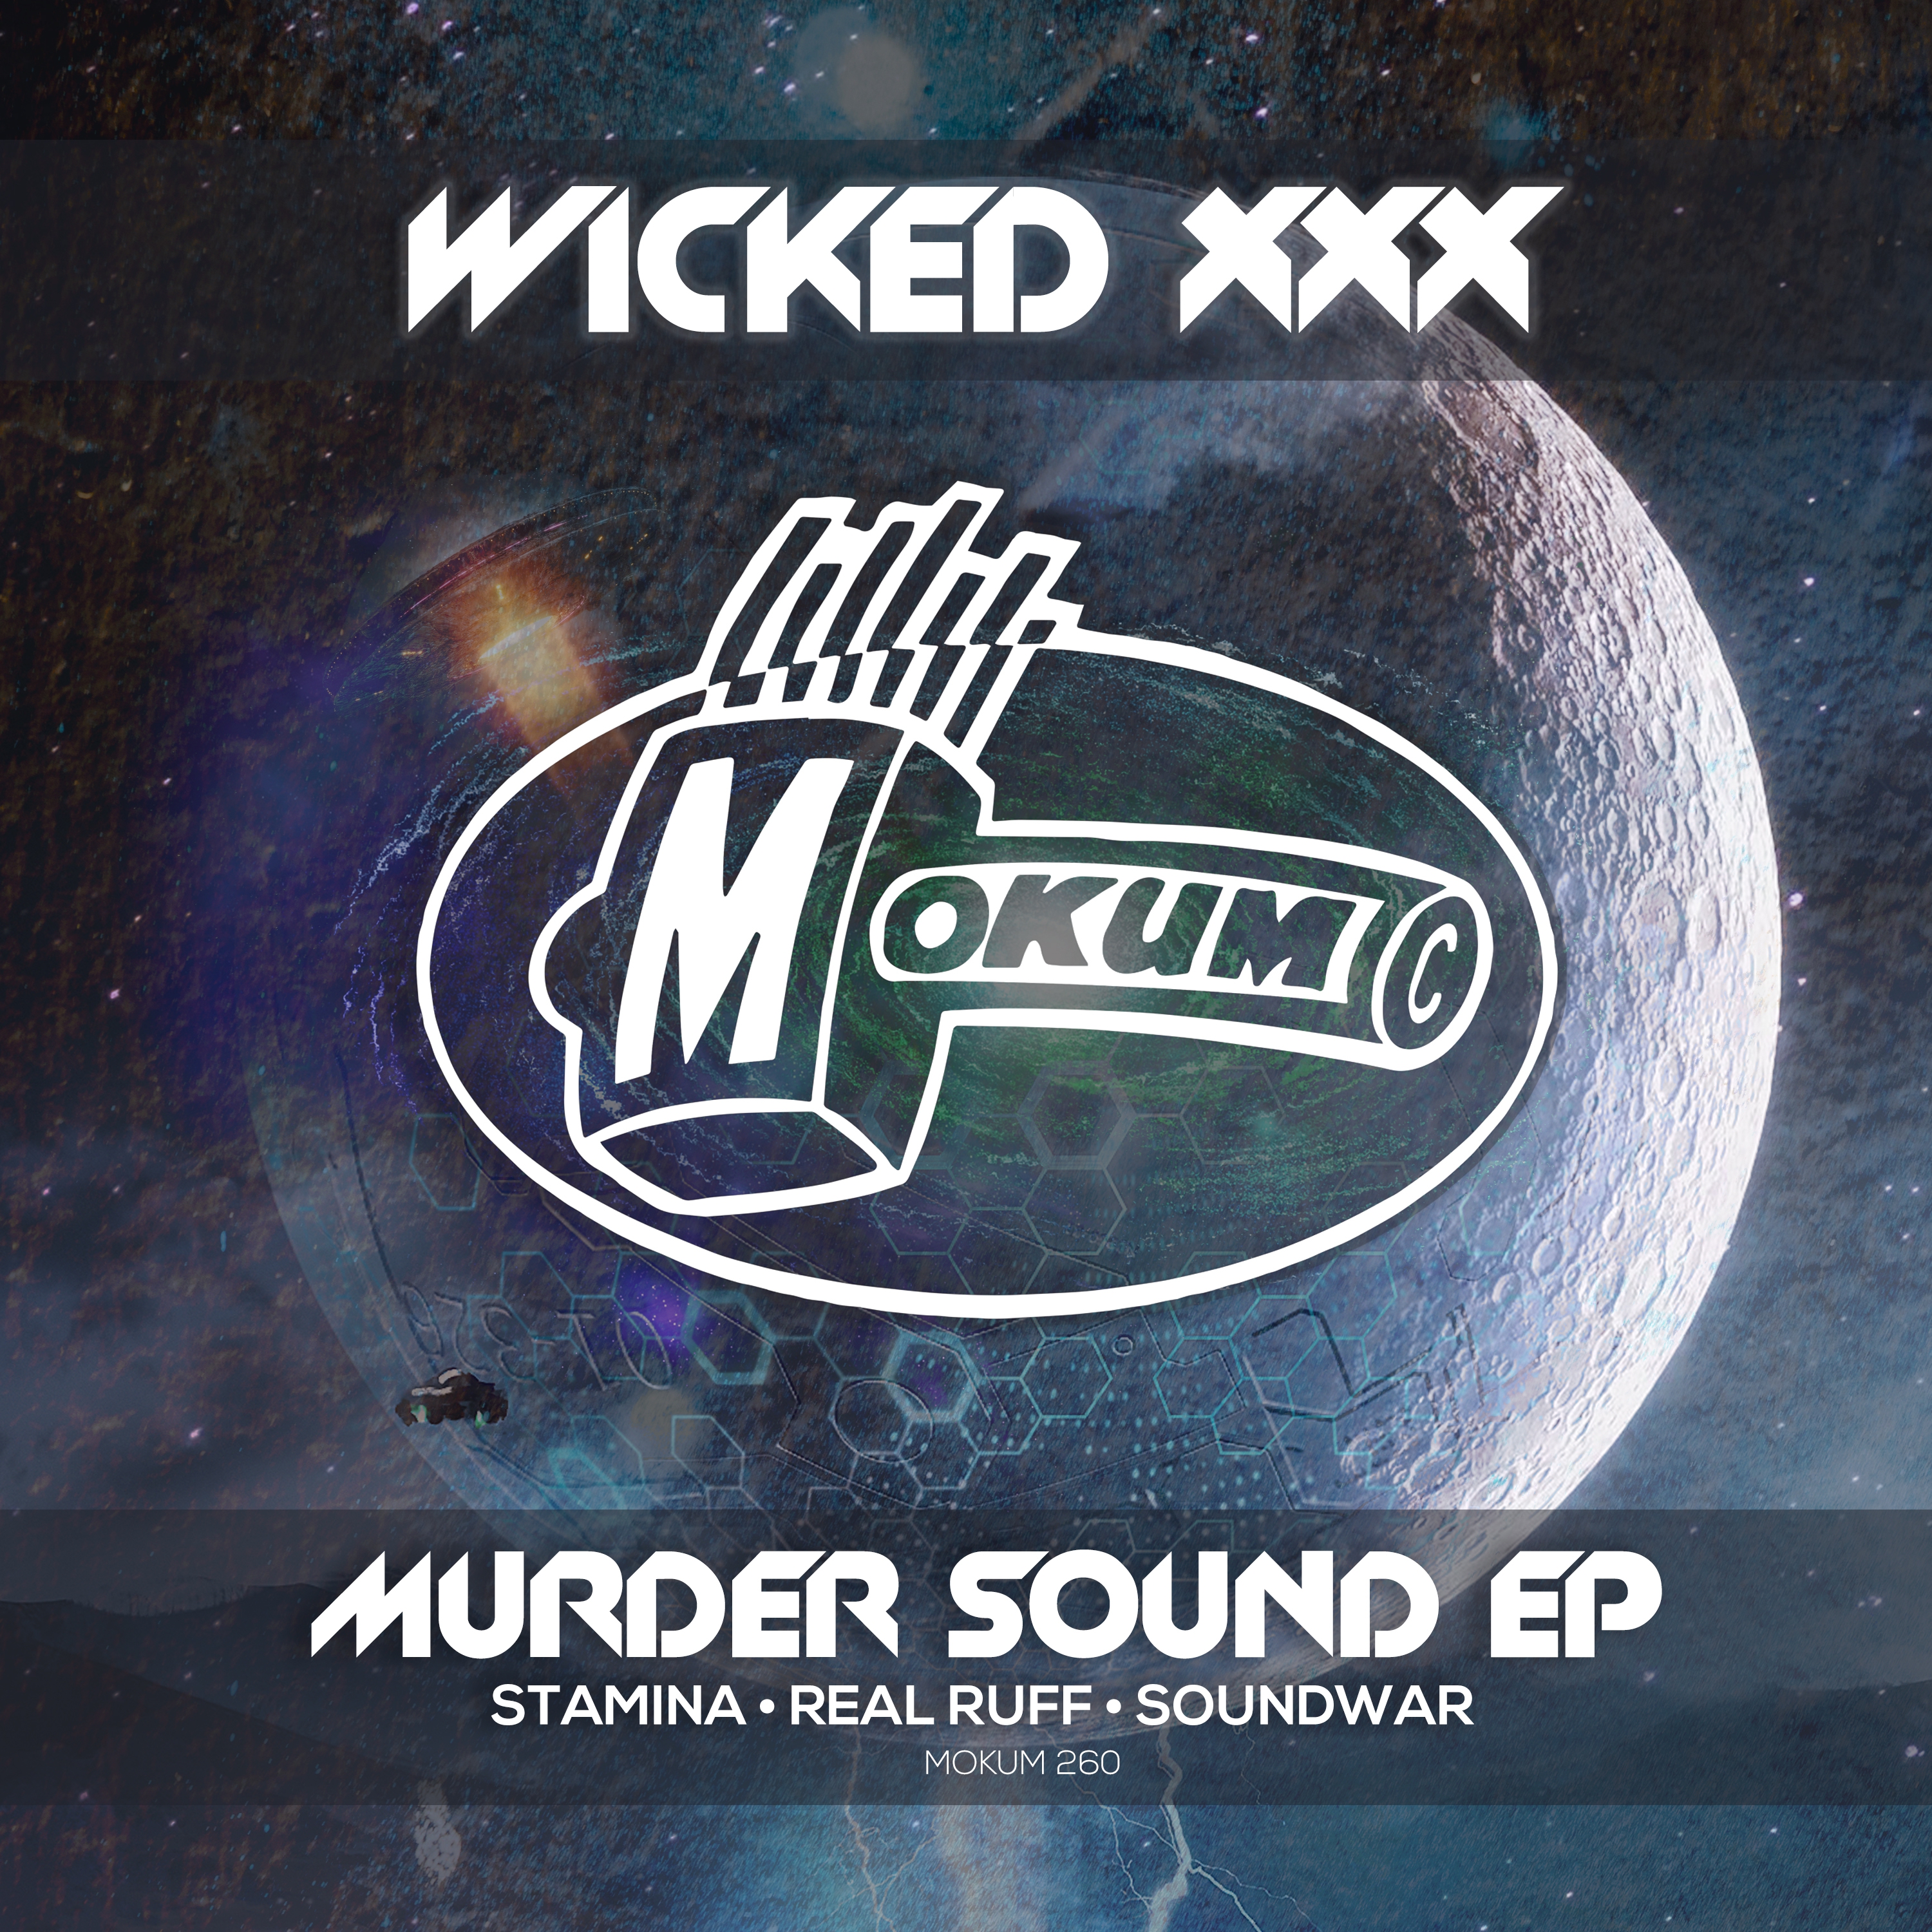 Wicked XXX - SoundWar (Original Mix) - MP3 and WAV downloads at Hardtunes